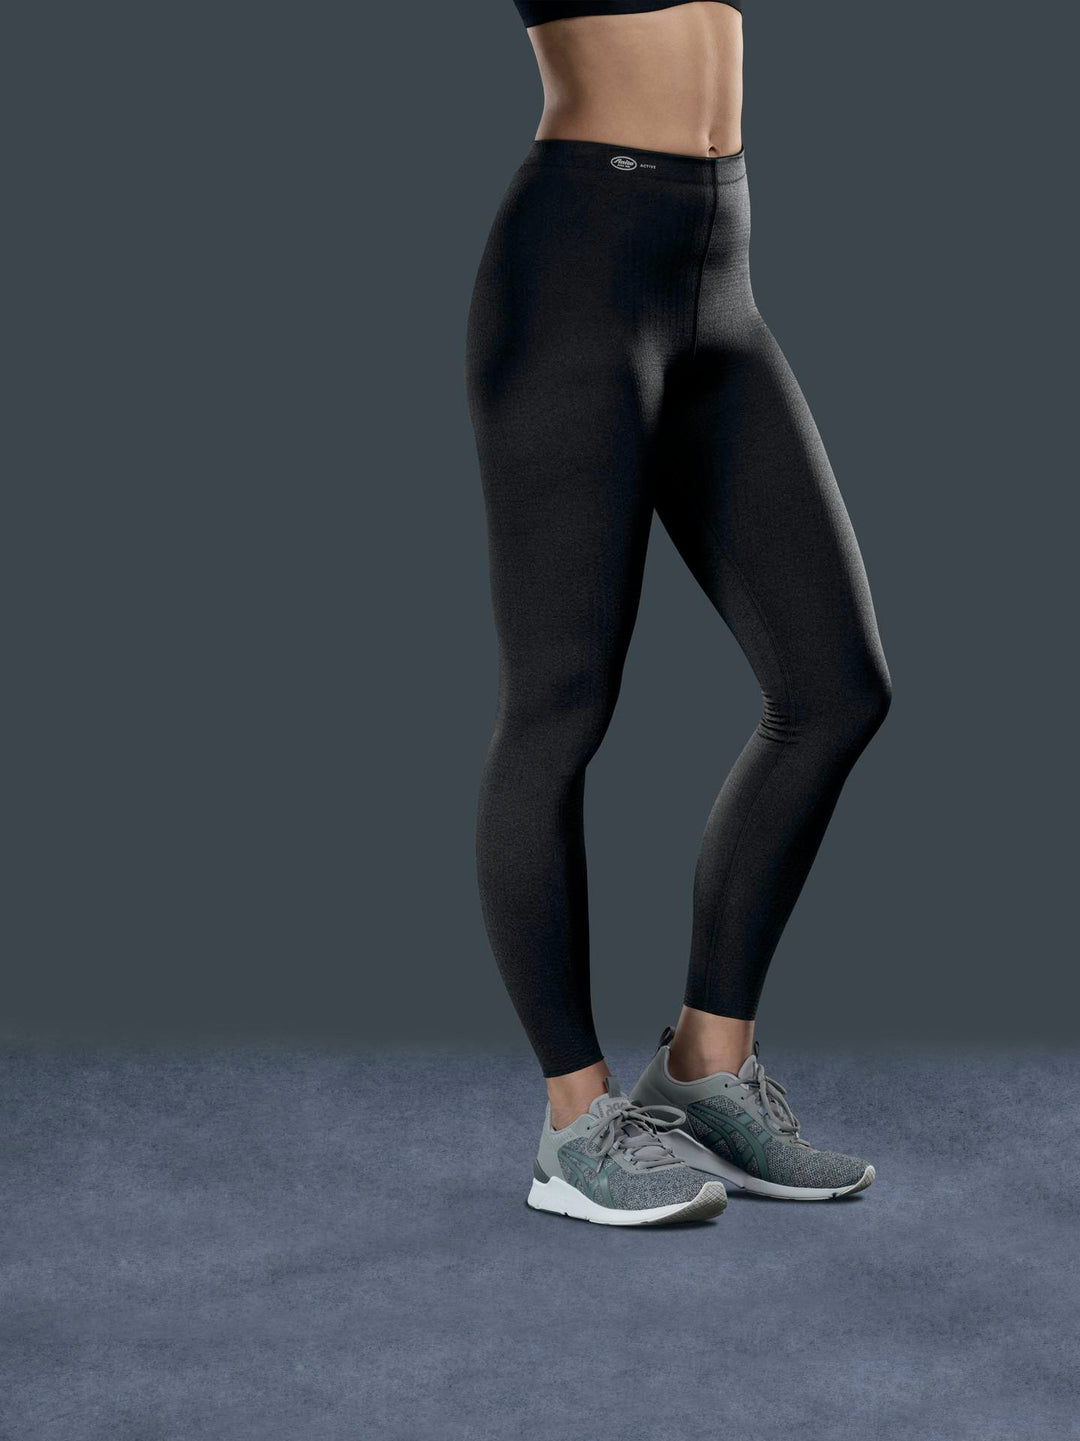 Zaldita Men's Compression Pants Transparent Sports Yoga Leggings Workout Tights  Sheer Hot Pants Black One Size at  Men's Clothing store